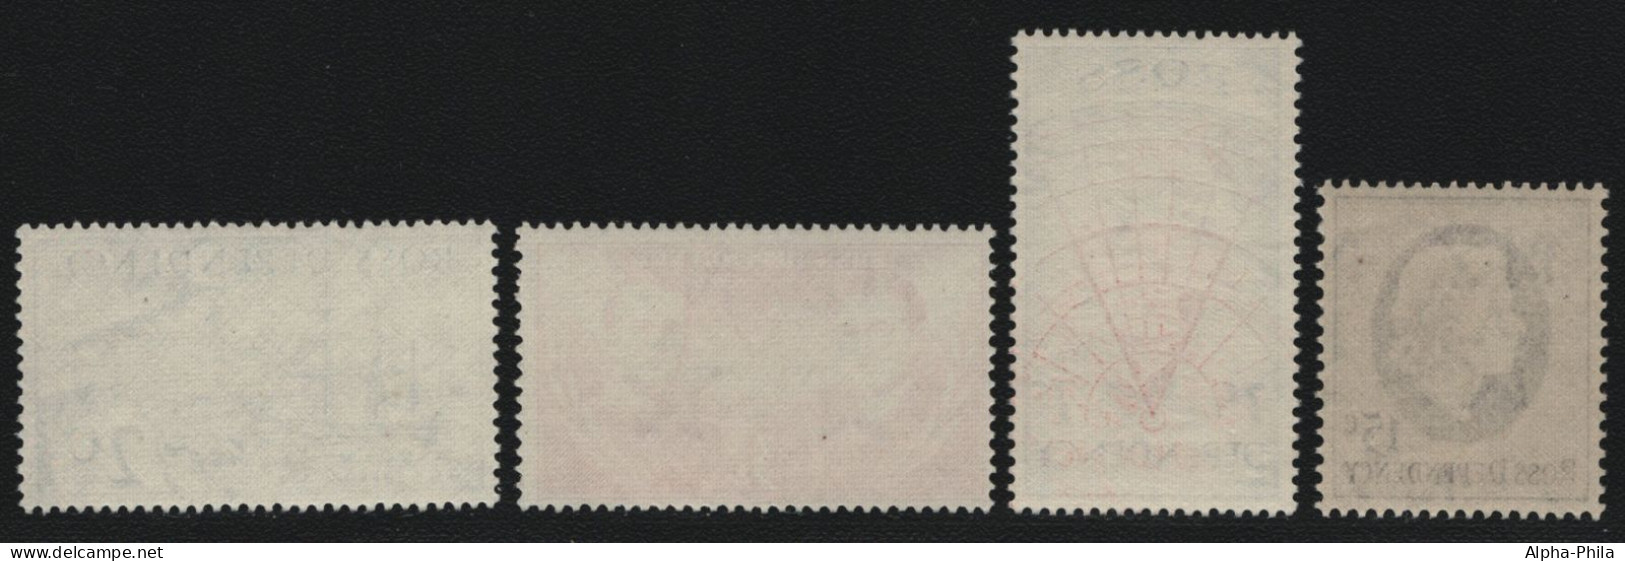 Ross-Gebiet 1967 - Mi-Nr. 5-8 ** - MNH - Freimarken / Definitives (II) - Neufs